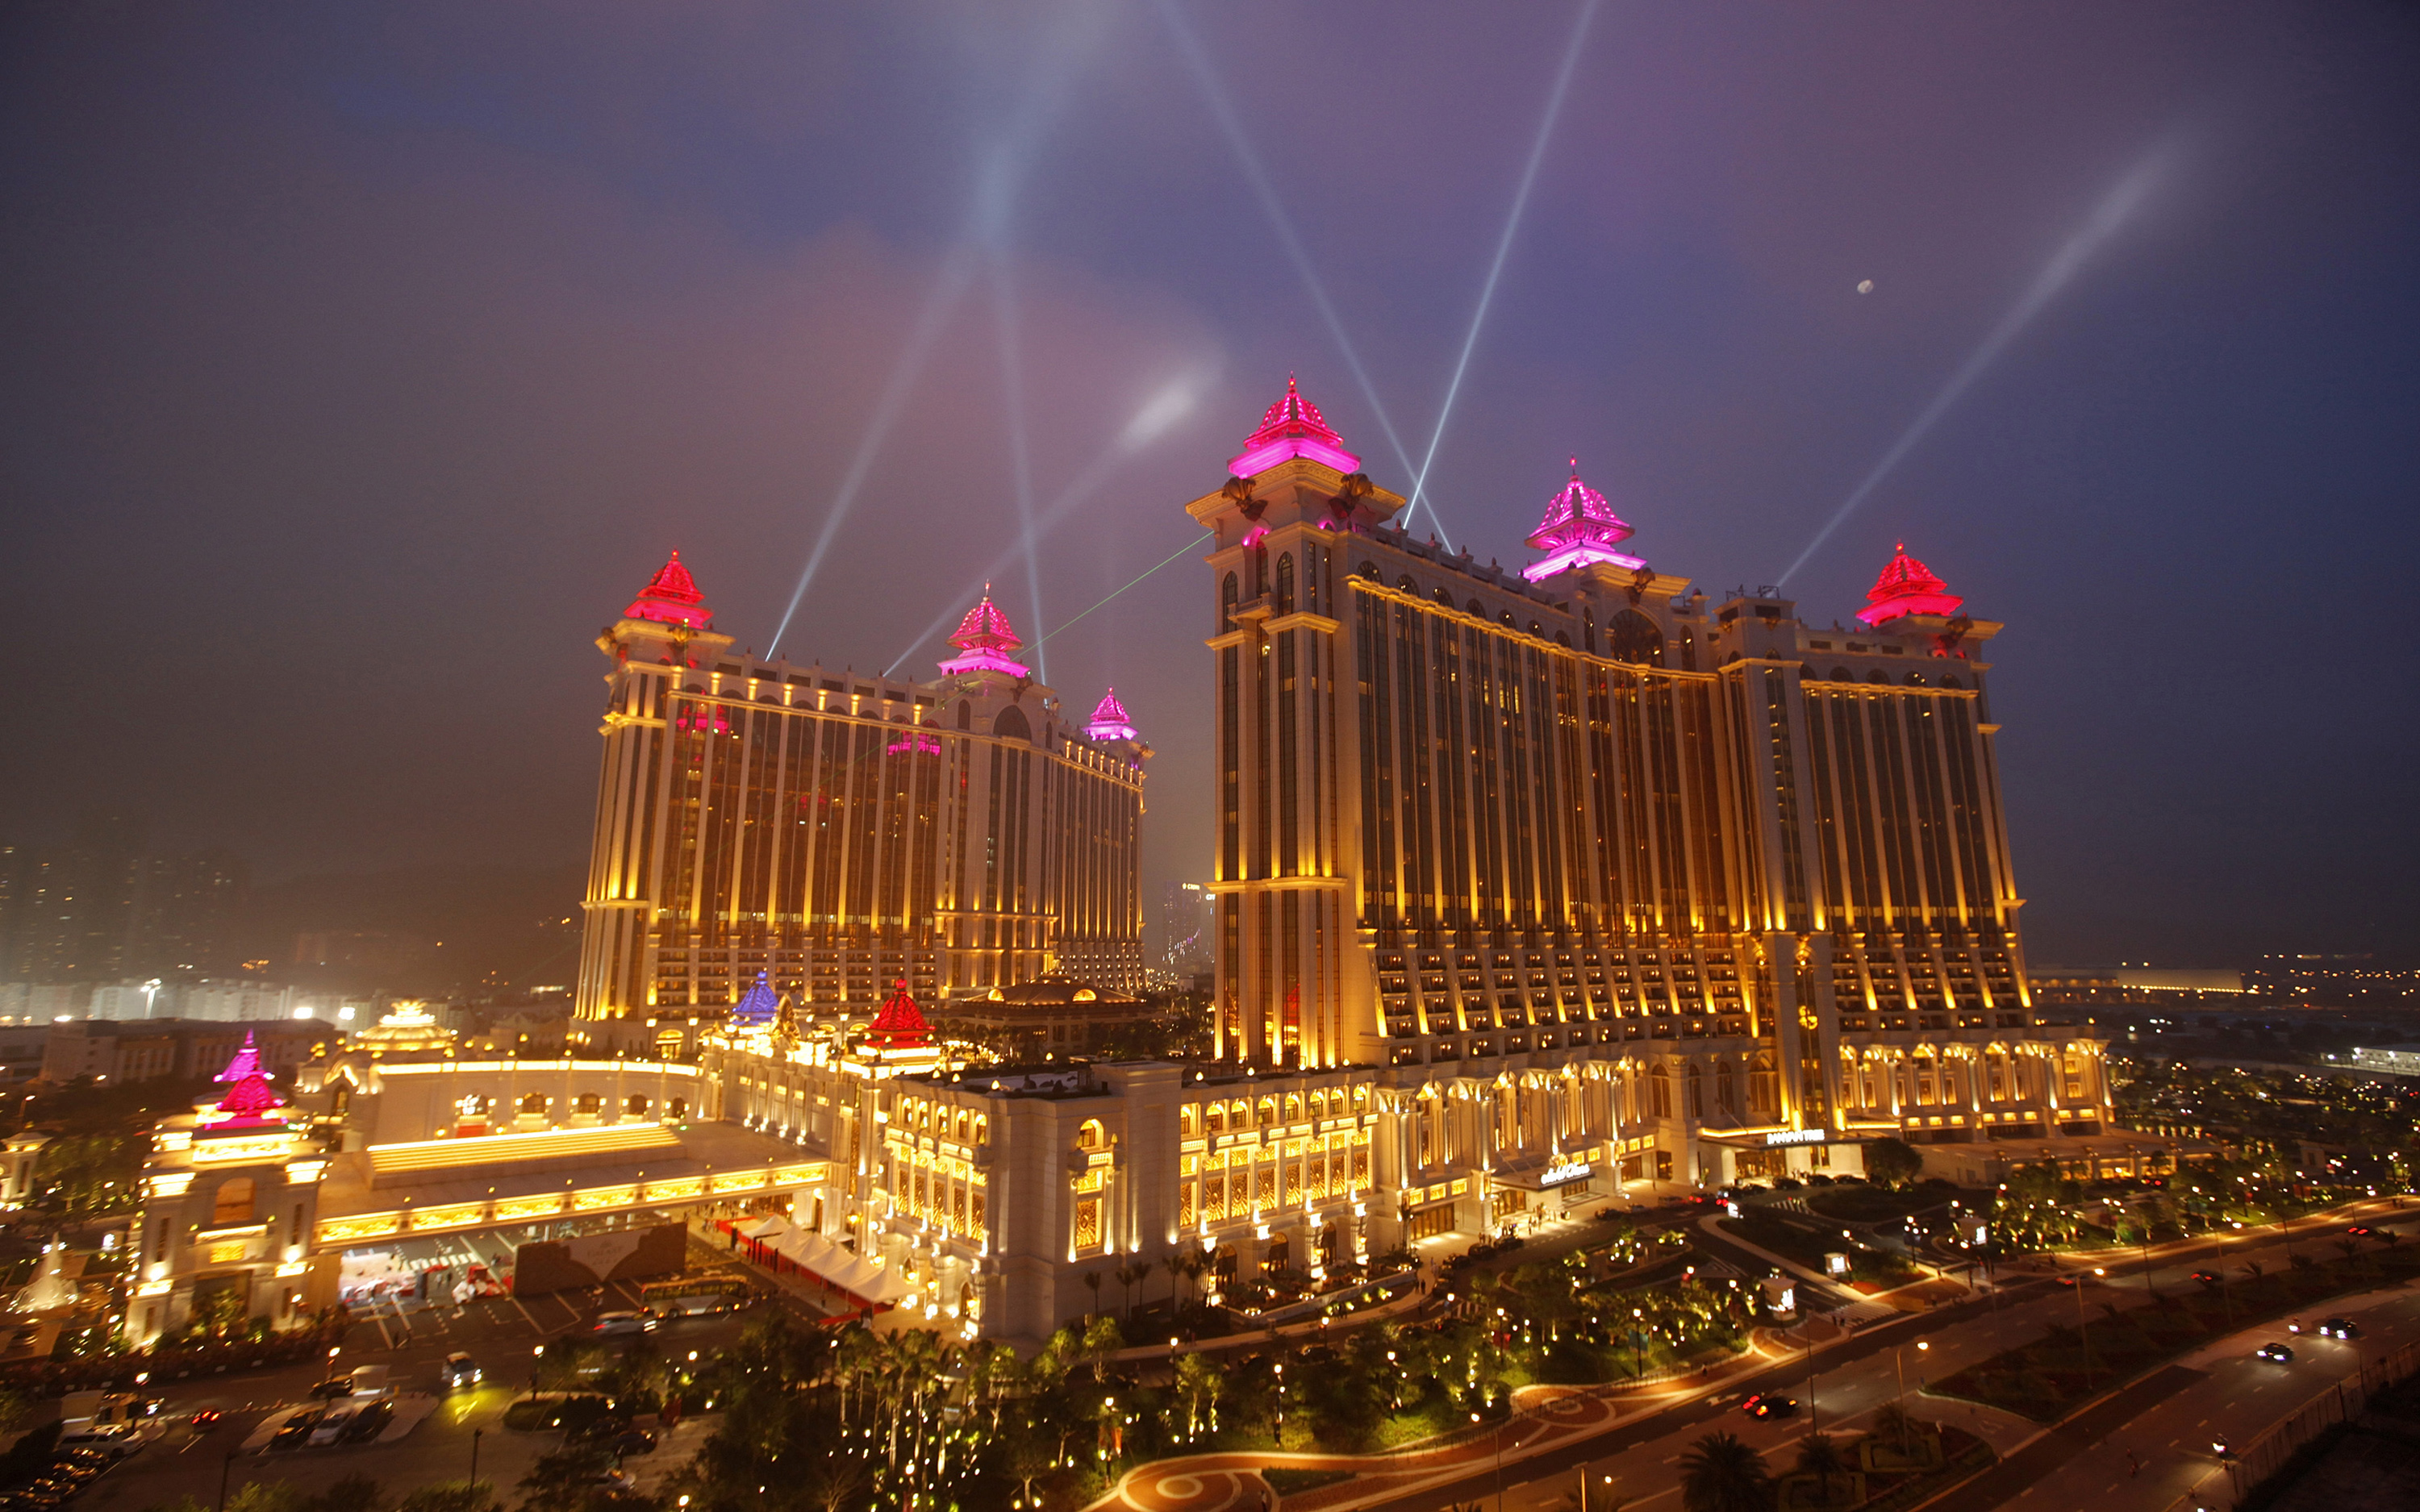 Galaxy macau china hotel casino and resort from billion desktop wallpaper hd x